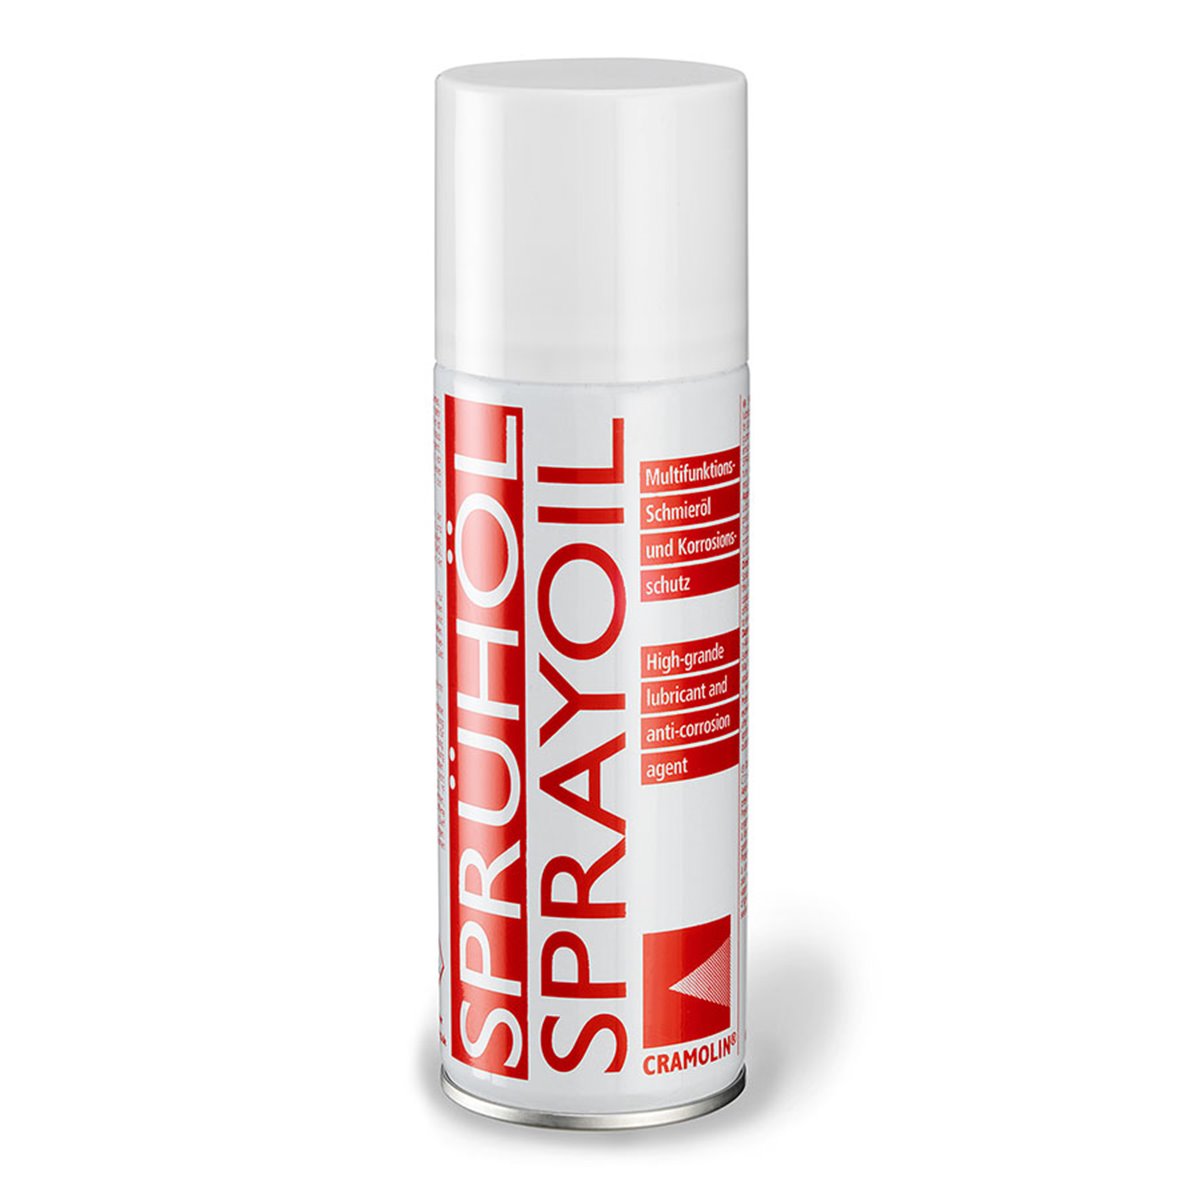 Protective spray SPRAYOIL 200ml Cramolin.